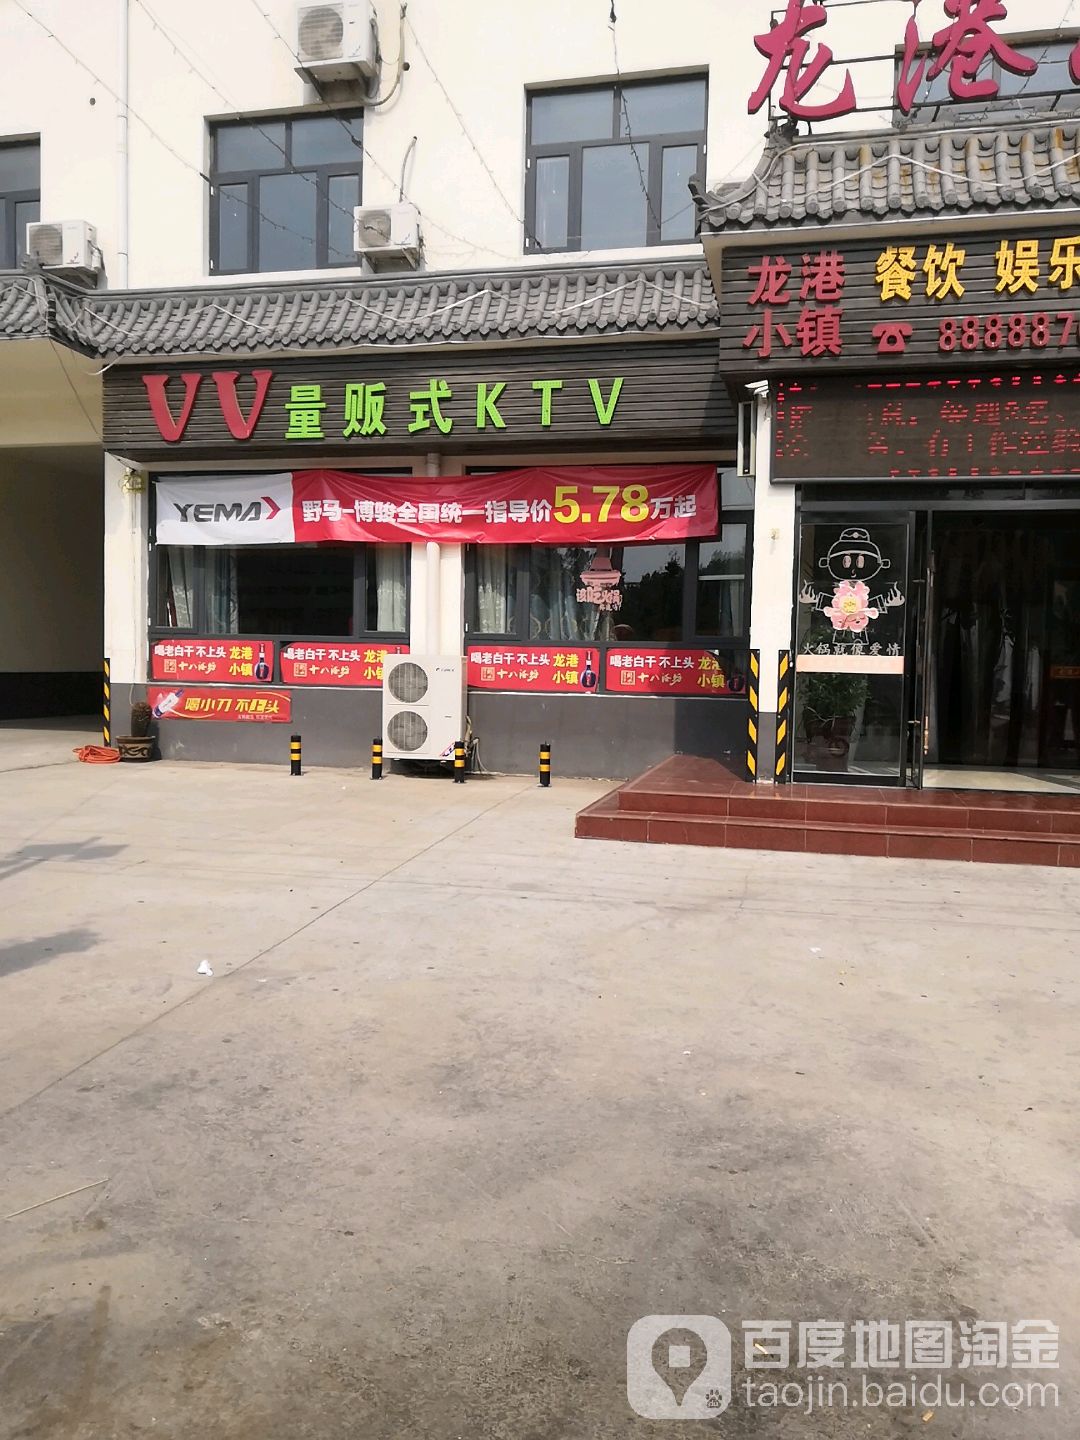 VV量販式KTV